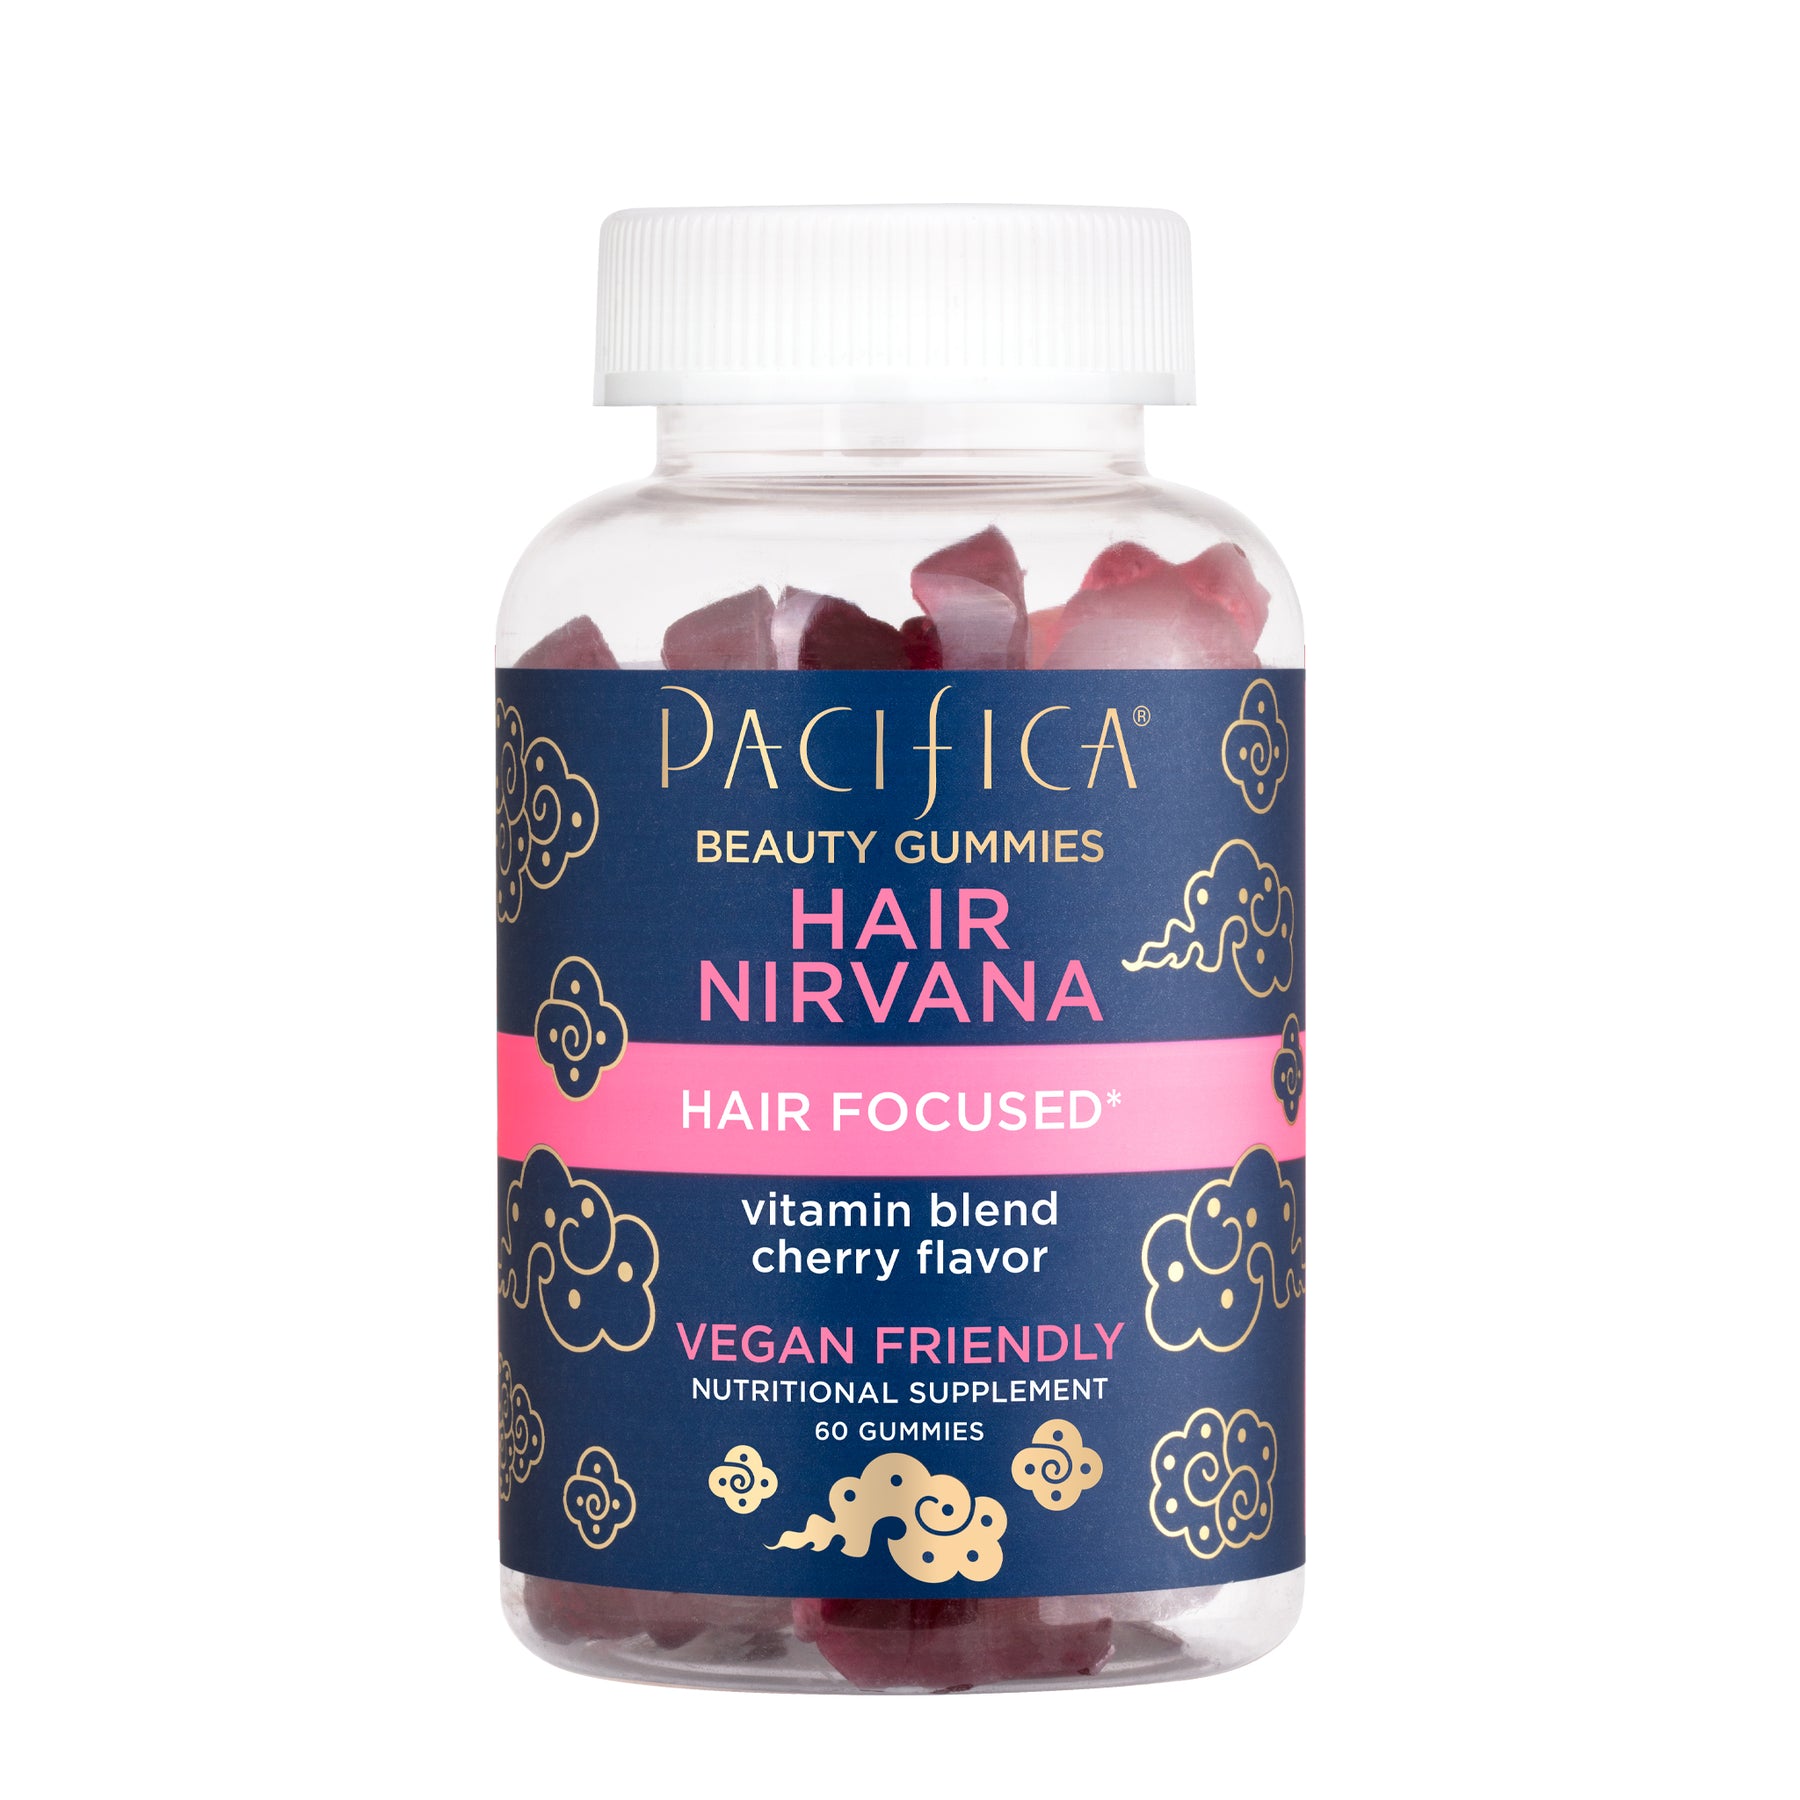 Hair Nirvana Beauty Gummies - Wellness - Pacifica Beauty